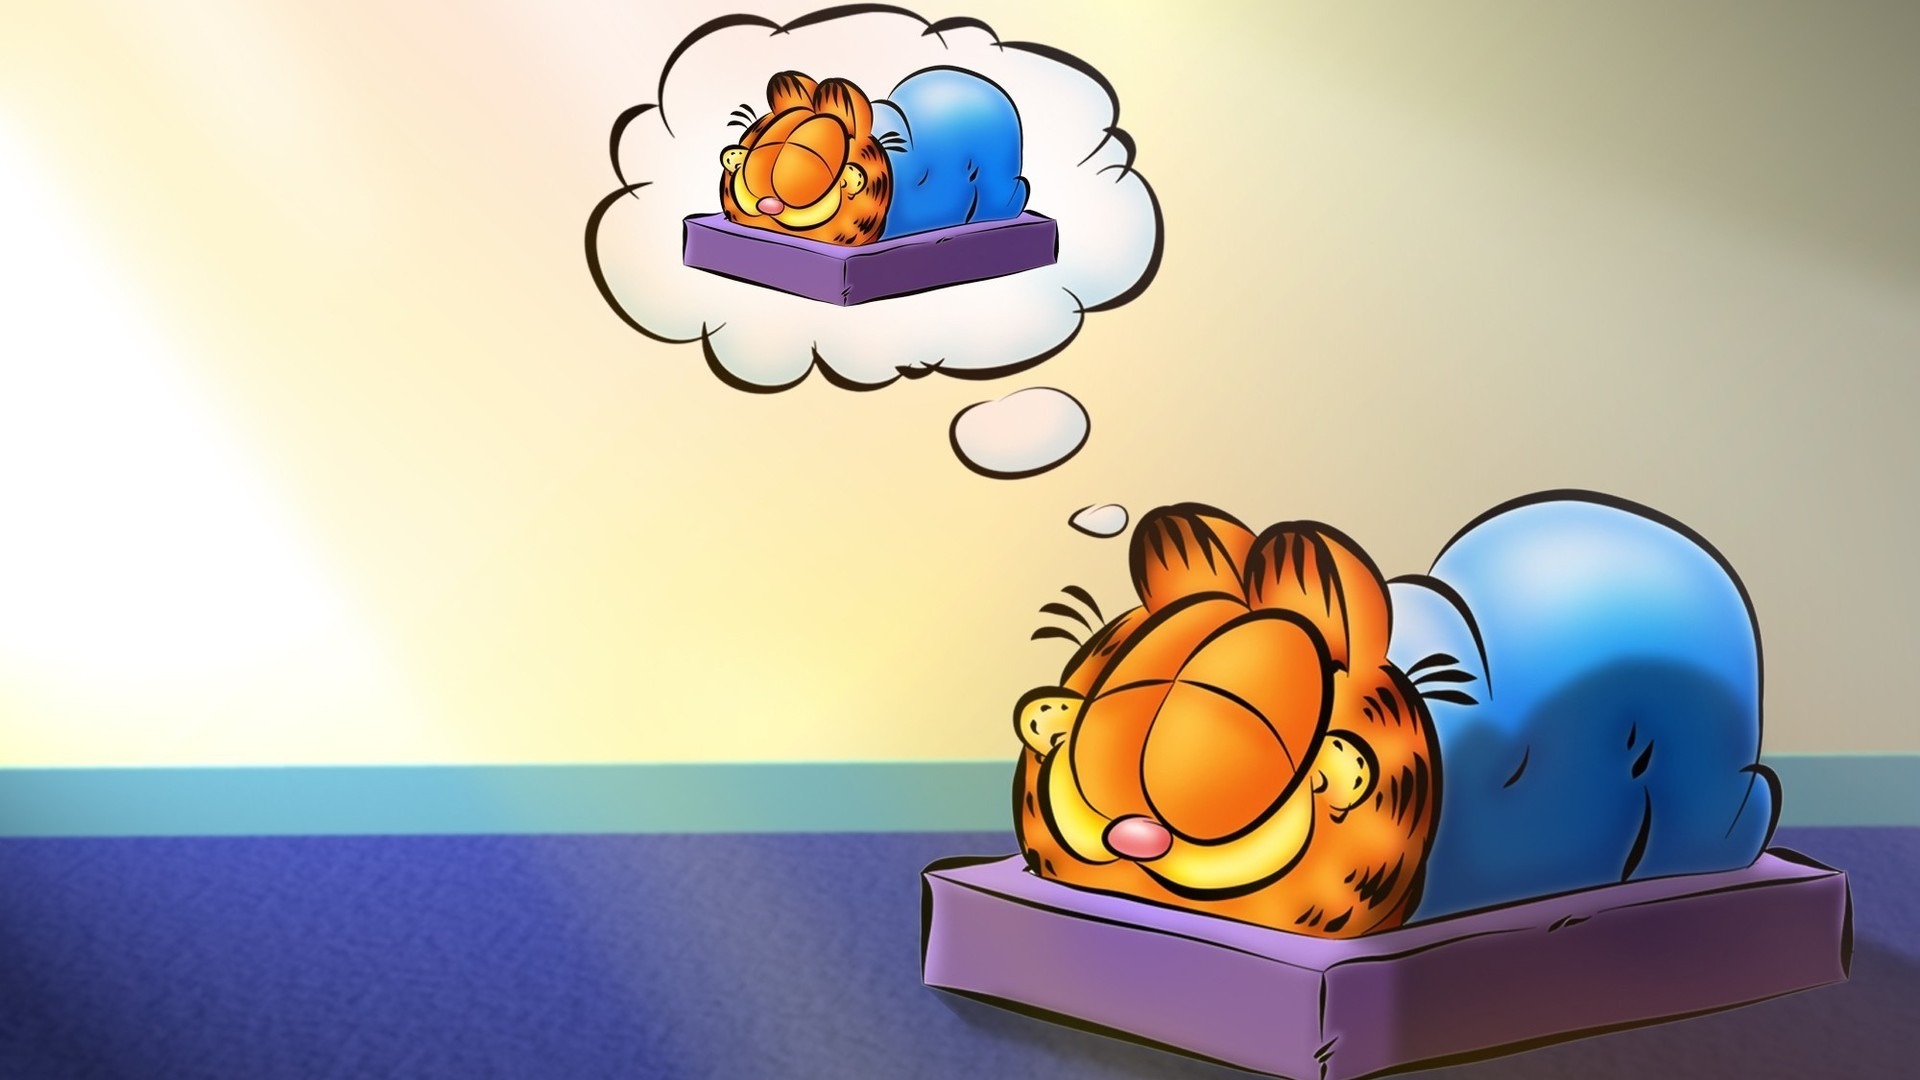 Garfield dreaming